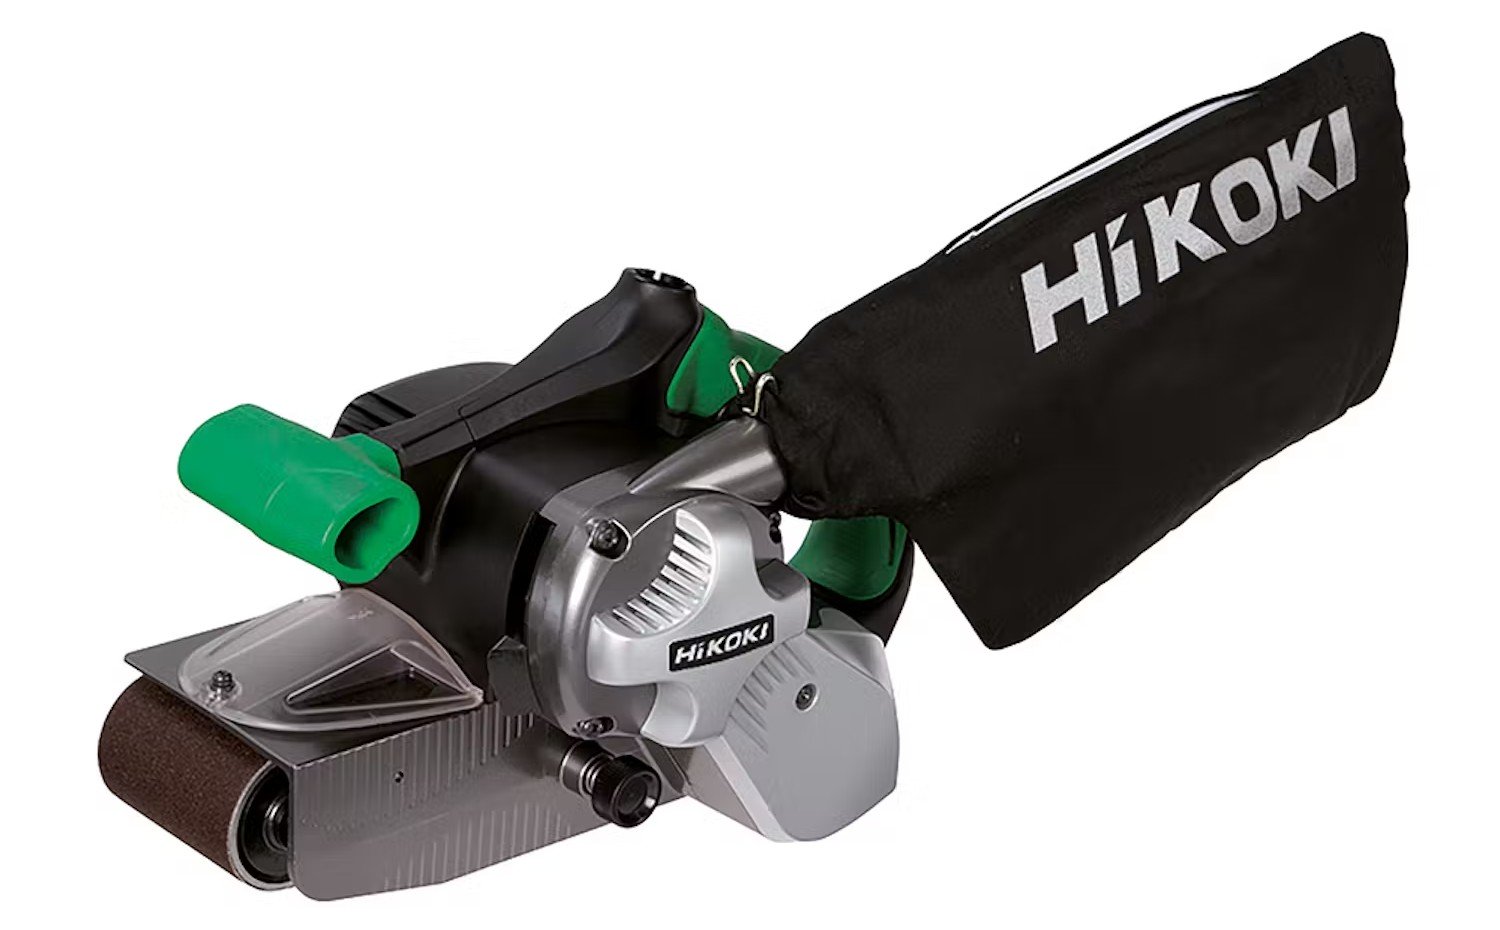 Slipmaskin för trä - Bandslip Hikoki Power Tools SB8V2 1020 W